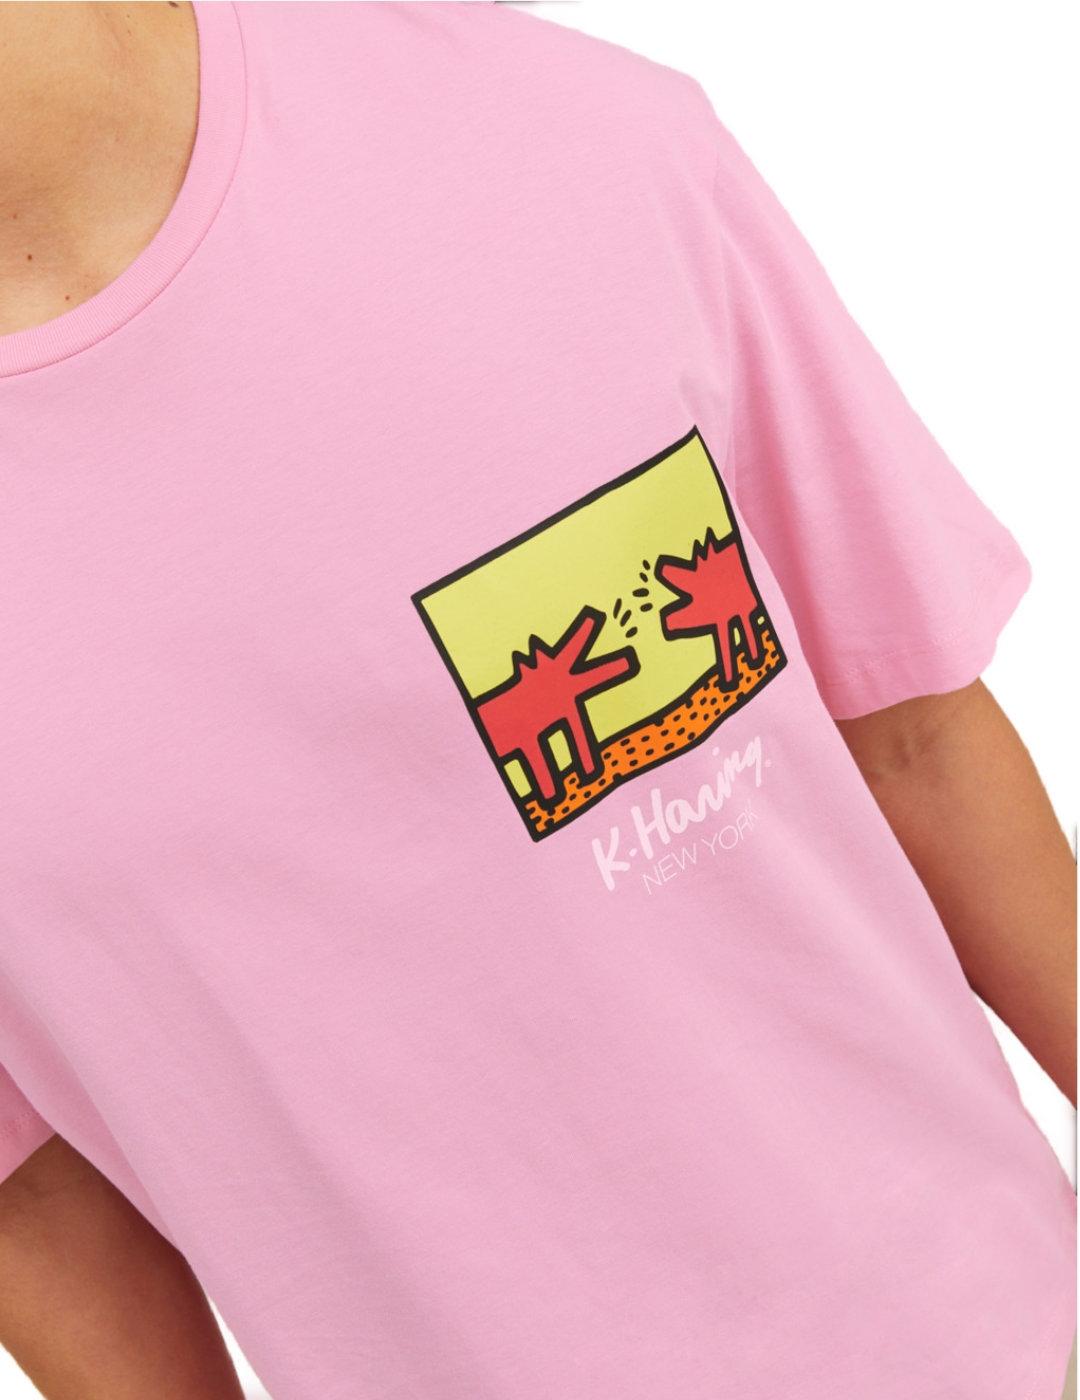 Camiseta Jack&Jones Harting rosa manga corta para hombre